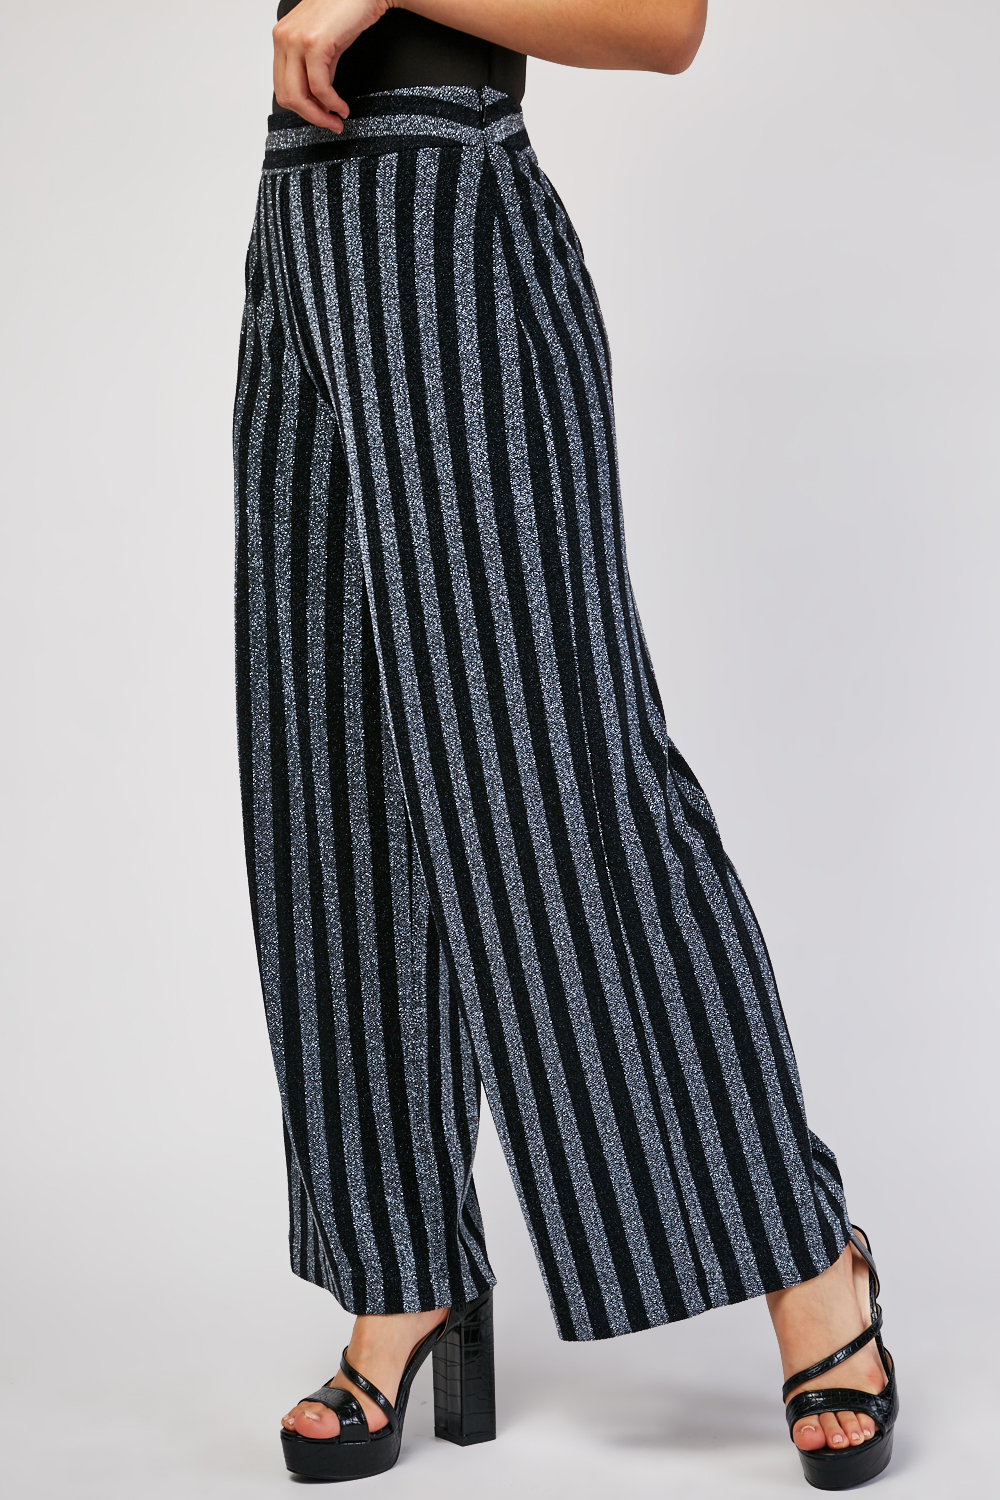 Lurex Striped Wide Leg Trousers - Just $3